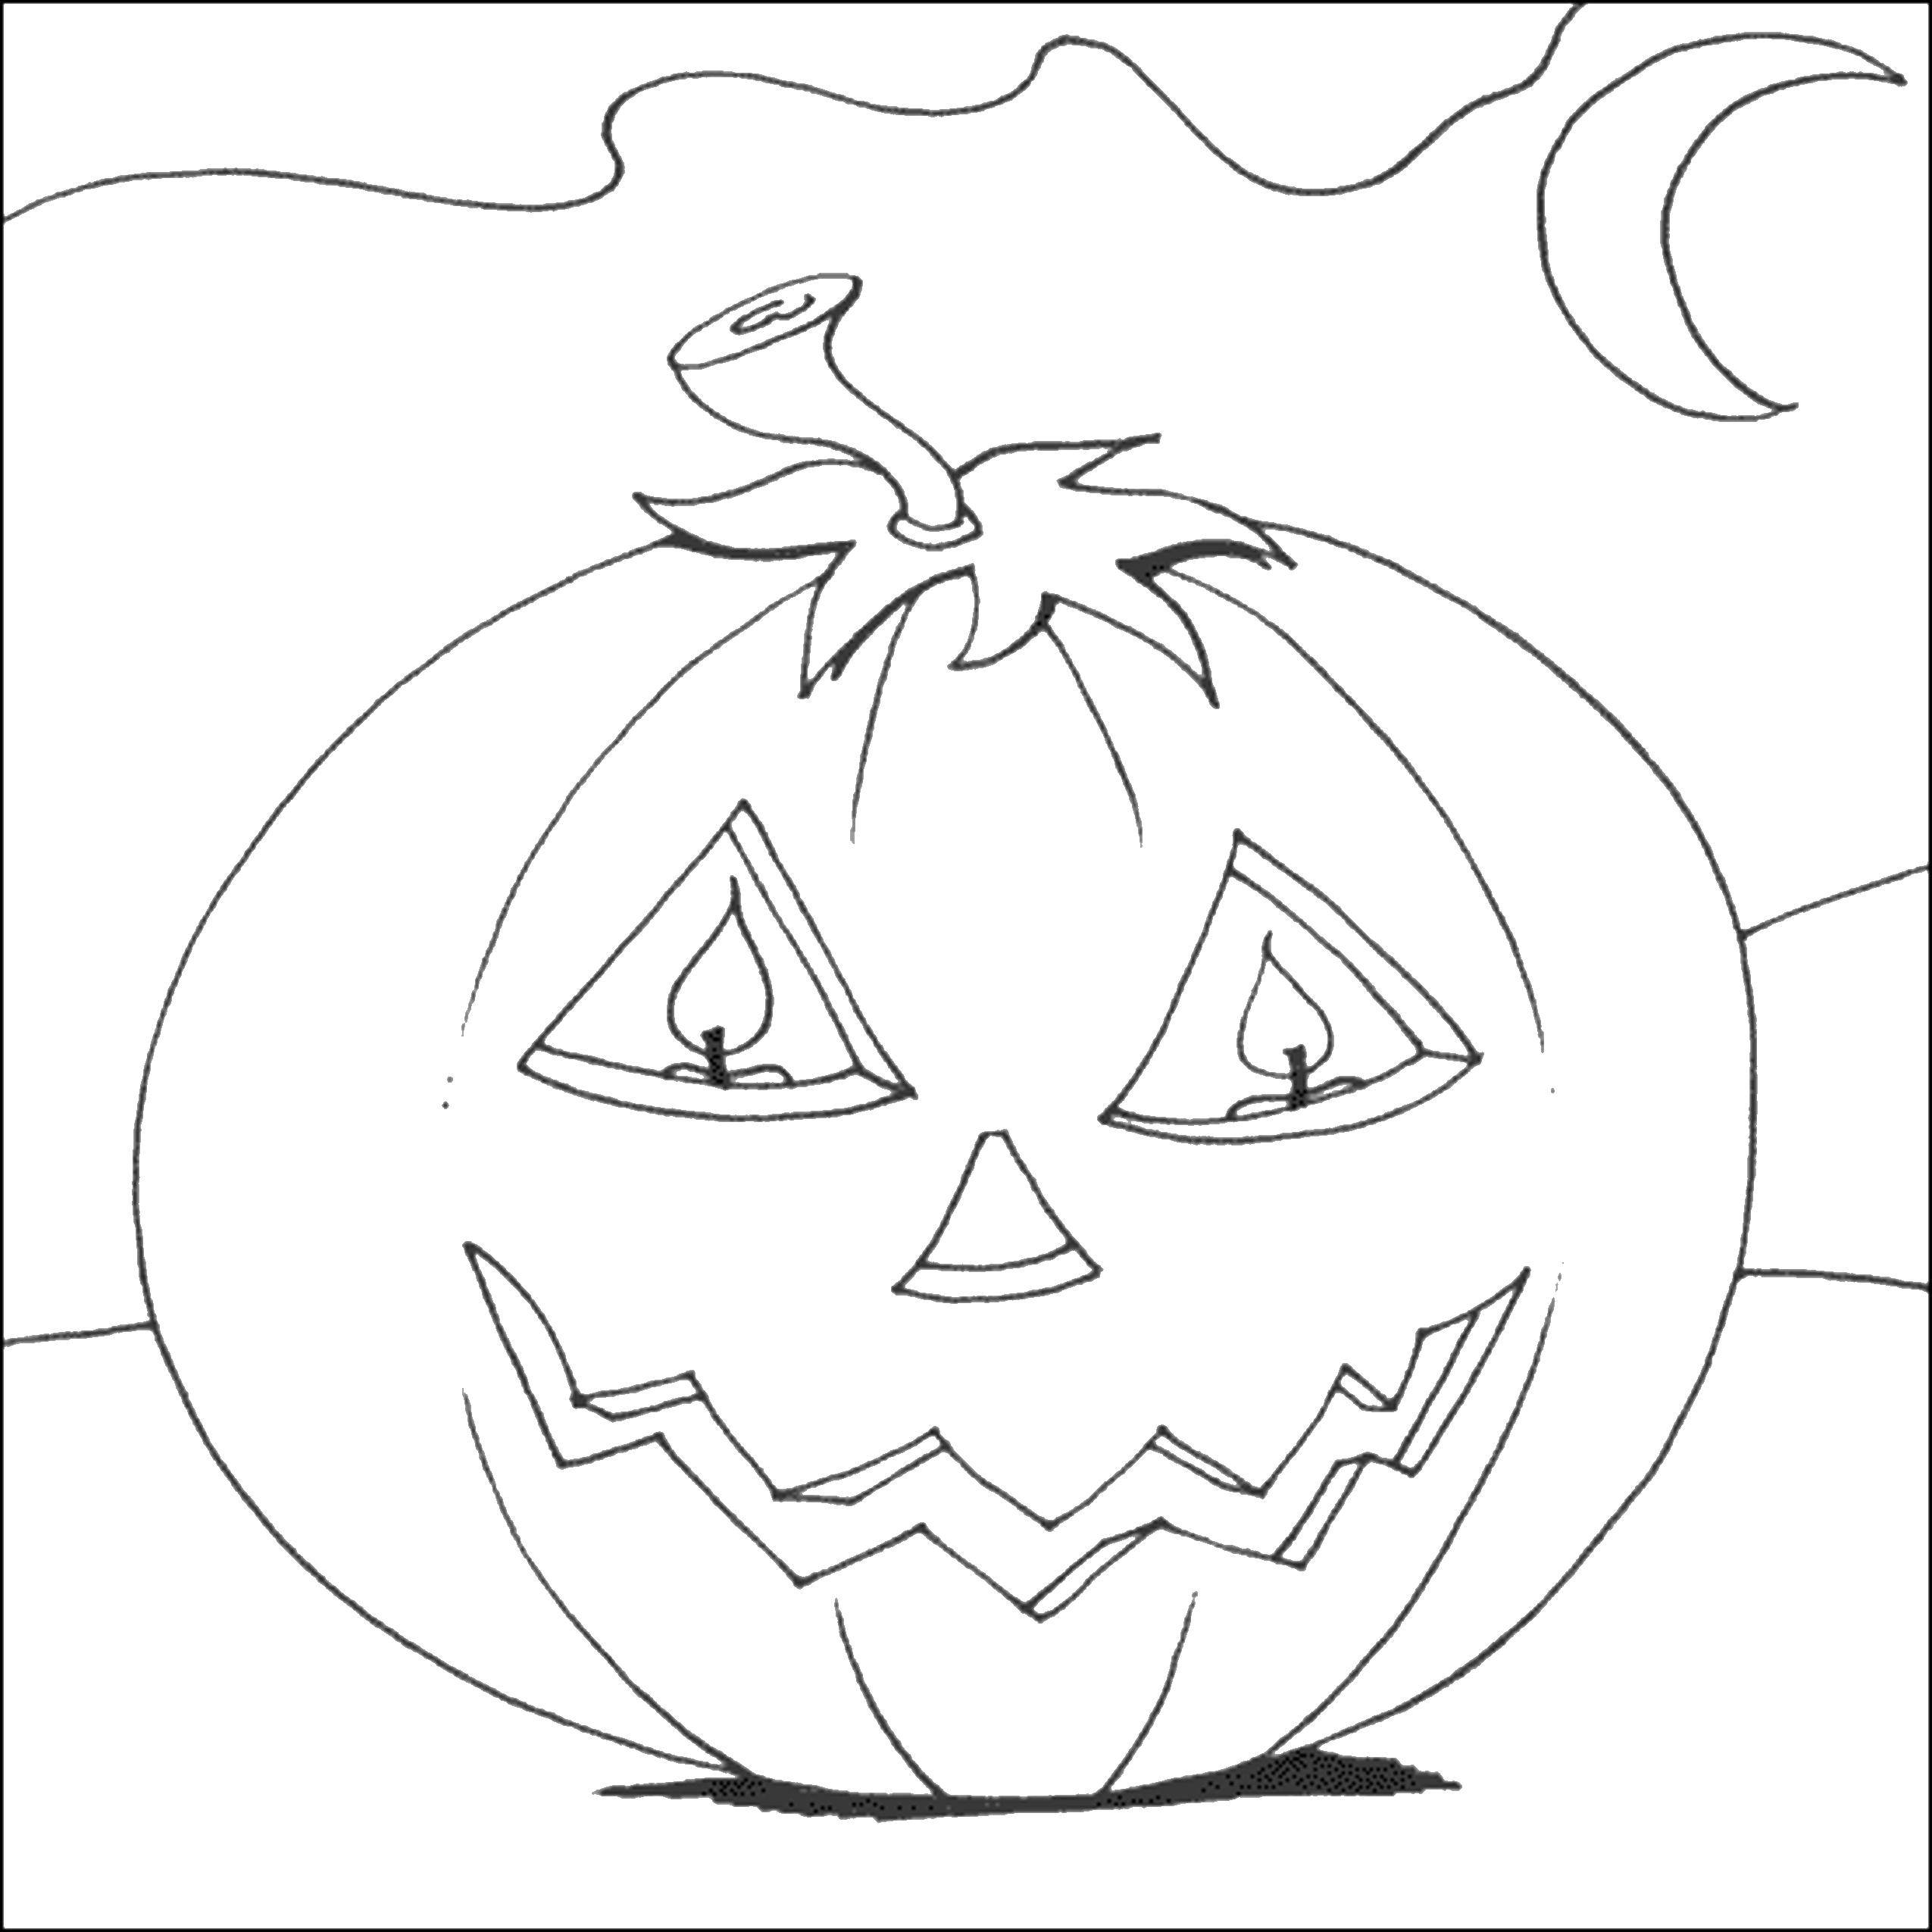 Coloring Pumpkin with candles. Category pumpkin Halloween. Tags:  pumpkin, Halloween, holiday.